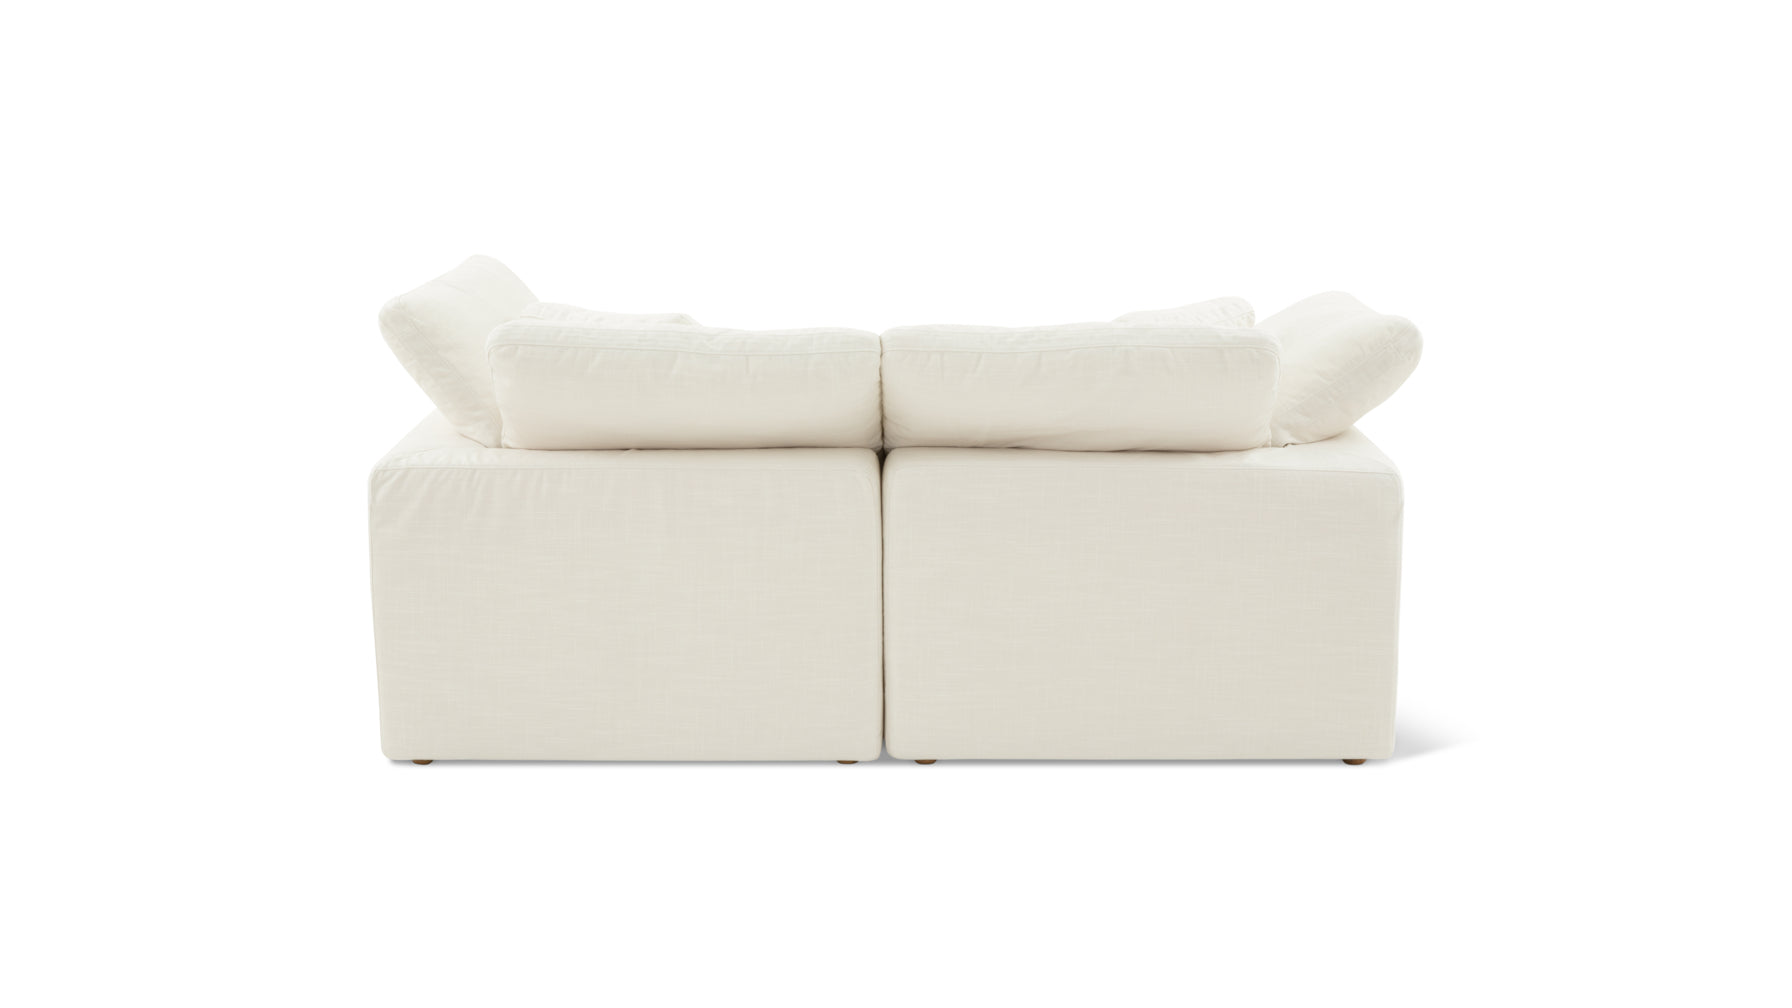 Movie Night™ 2-Piece Modular Sofa, Standard, Cream Linen - Image 10